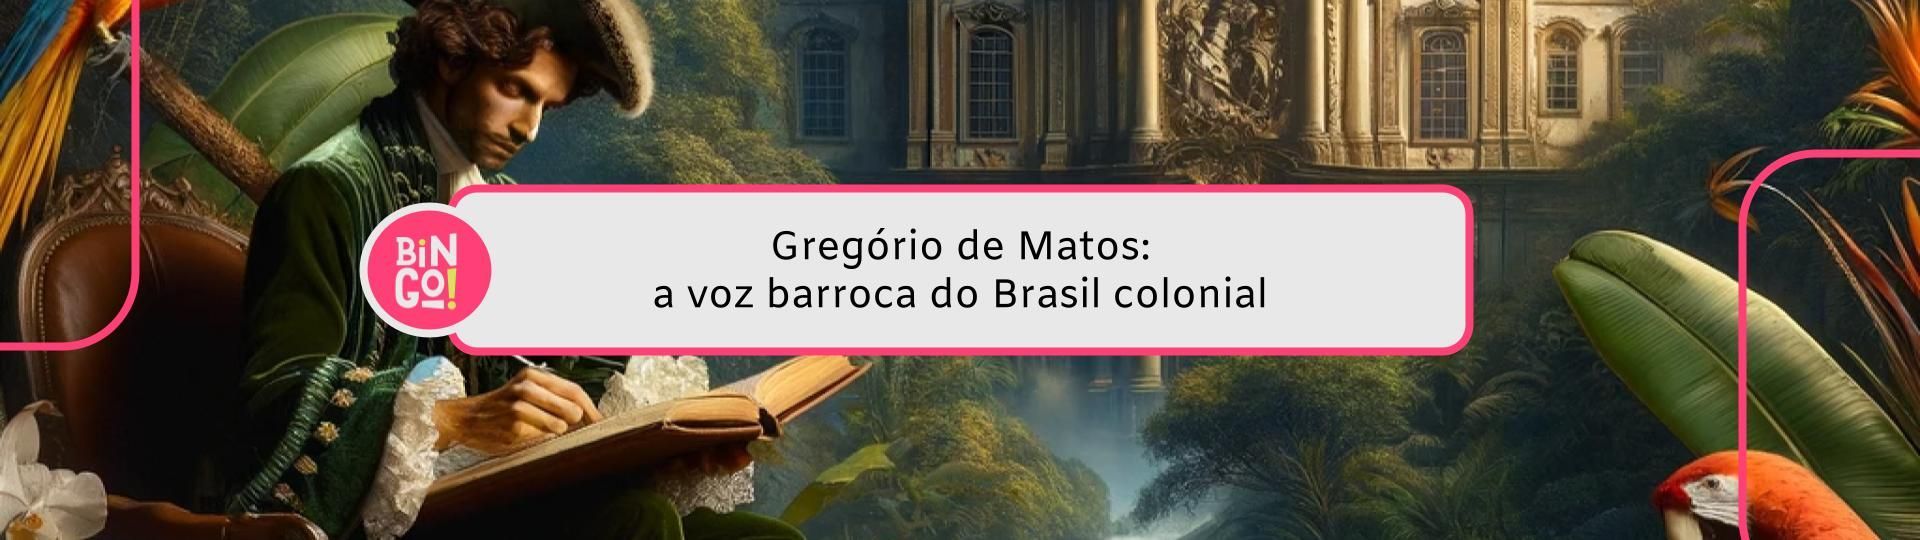 gregorio-de-matos-a-voz-barroca-do-brasil-colonial